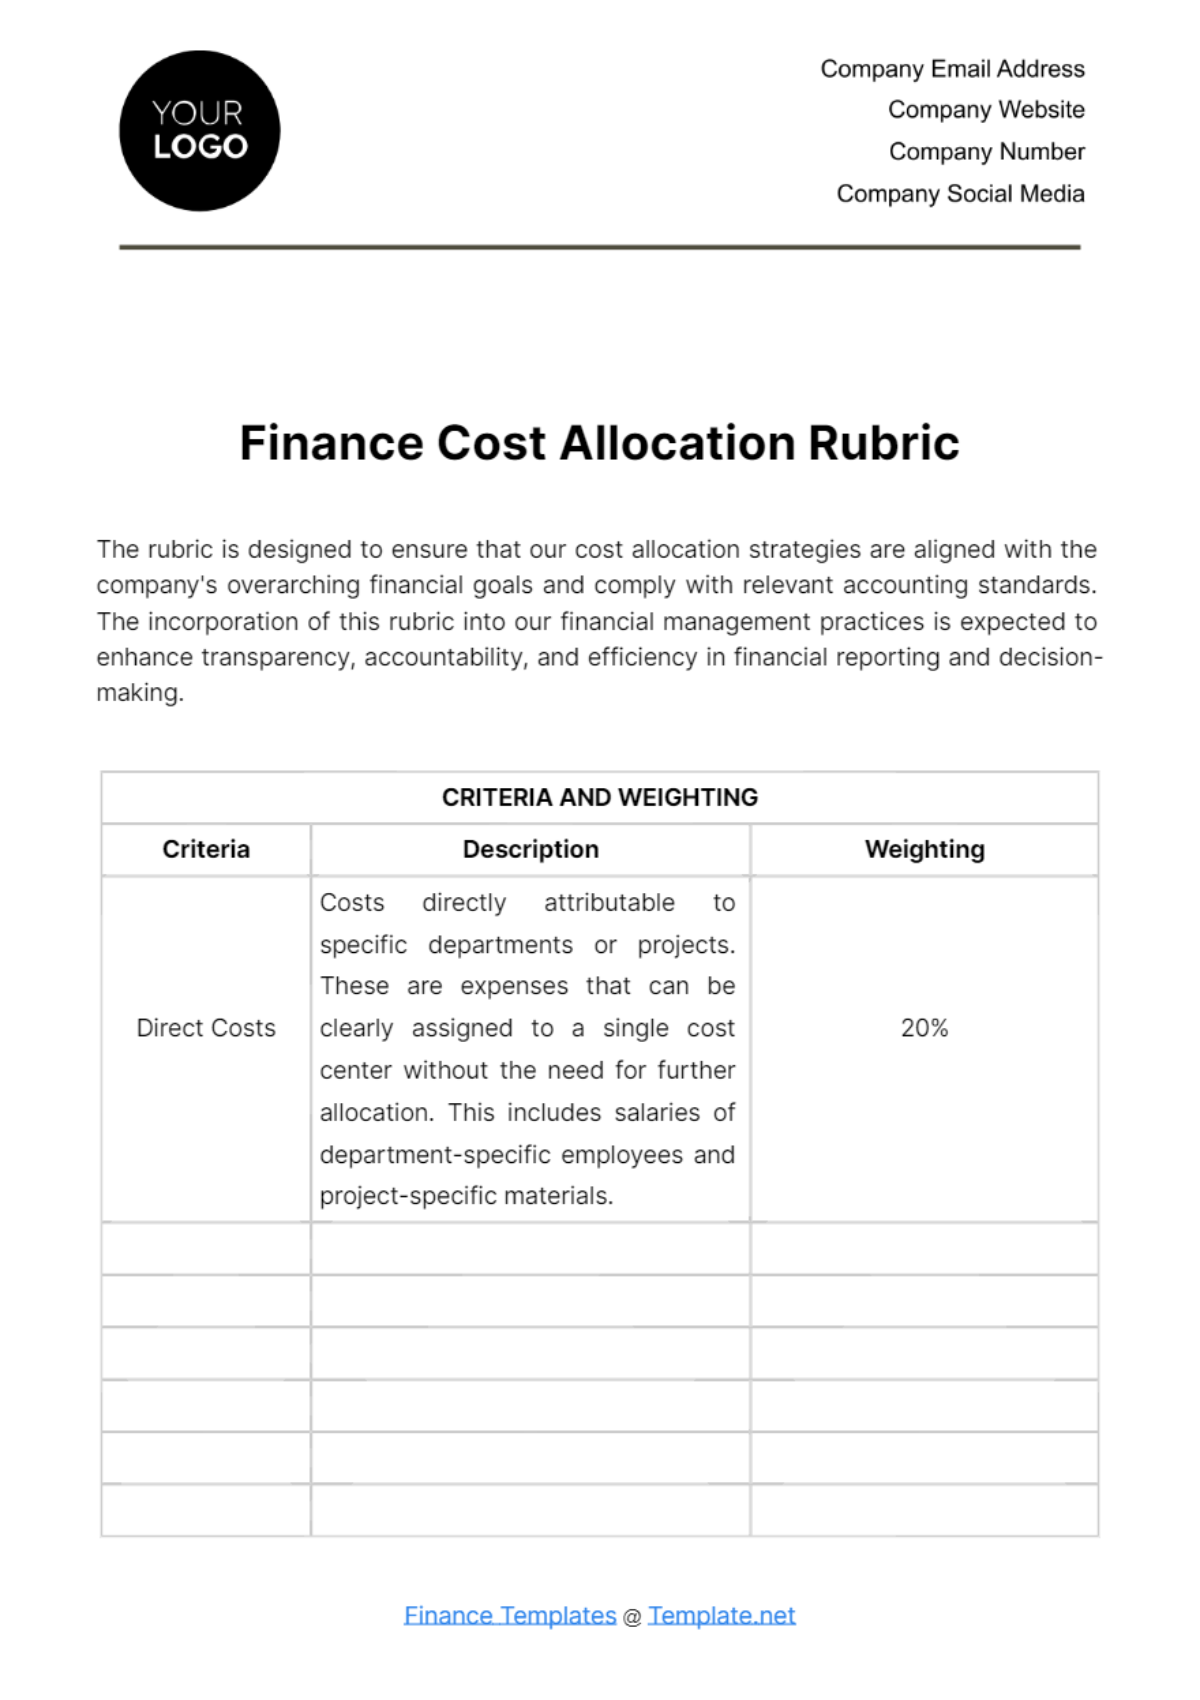 Free Finance Cost Allocation Rubric Template